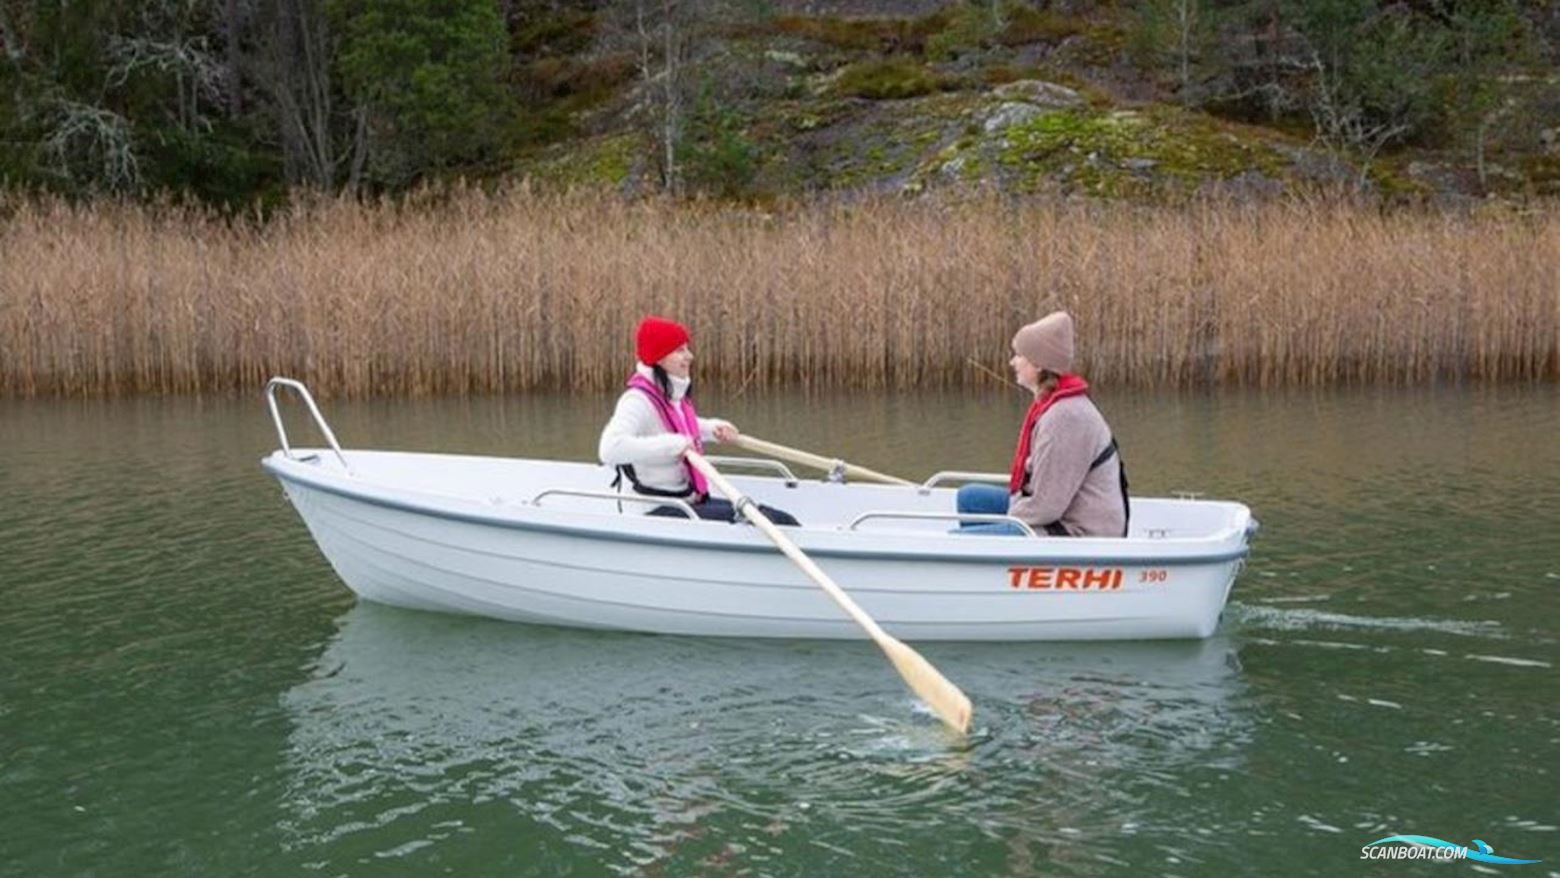 Terhi 390 Motor boat 2023, Sweden